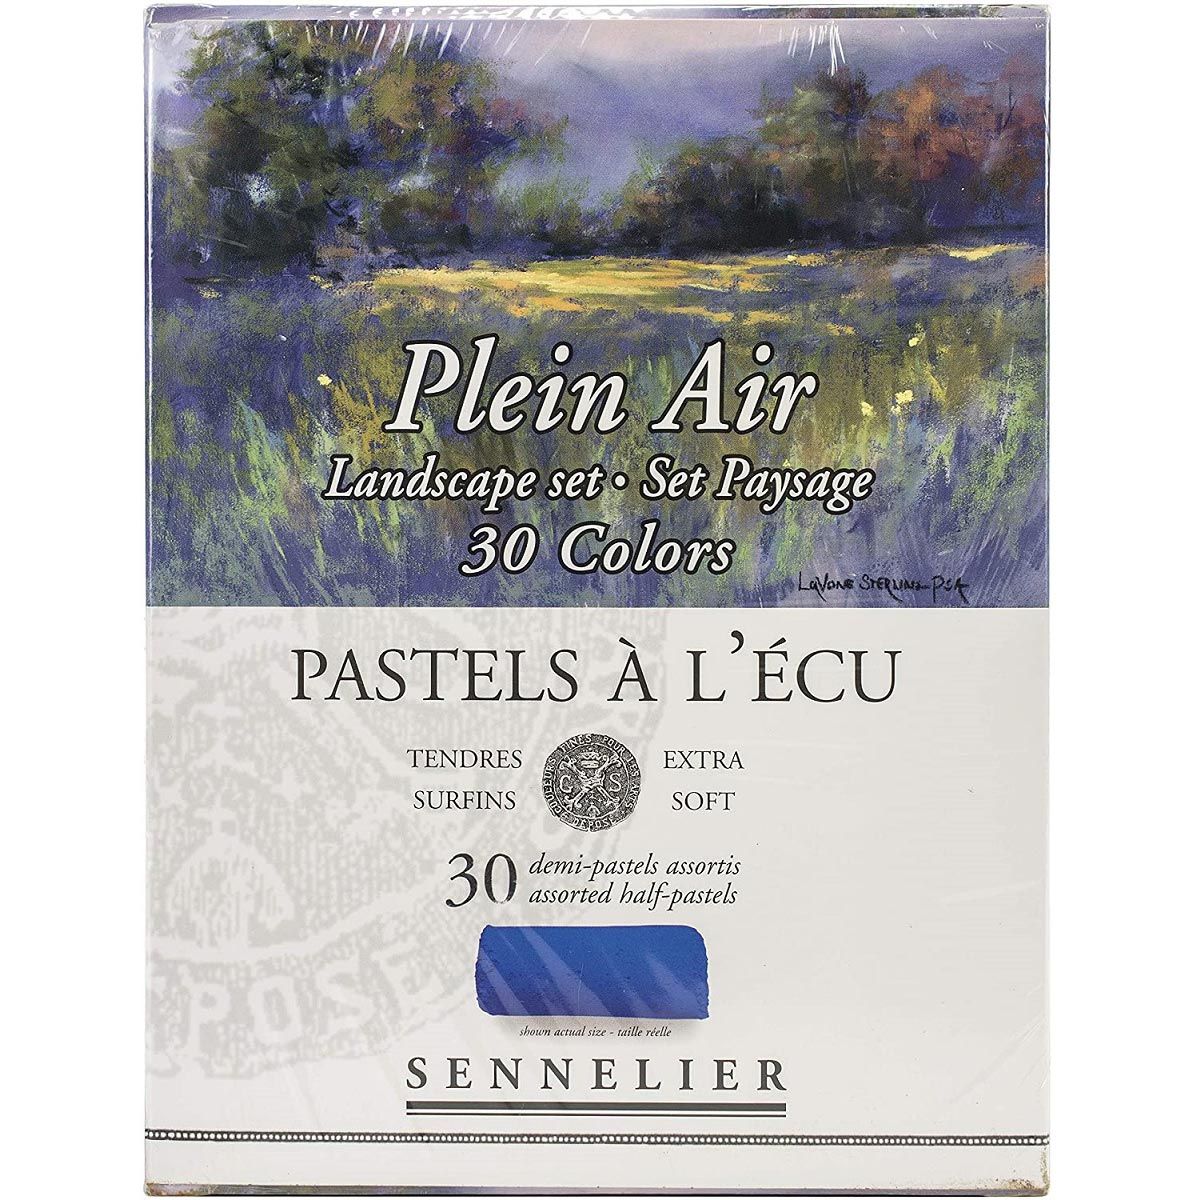 Sennelier Extra Soft Pastel Half-Sticks Landscape Sets of 30